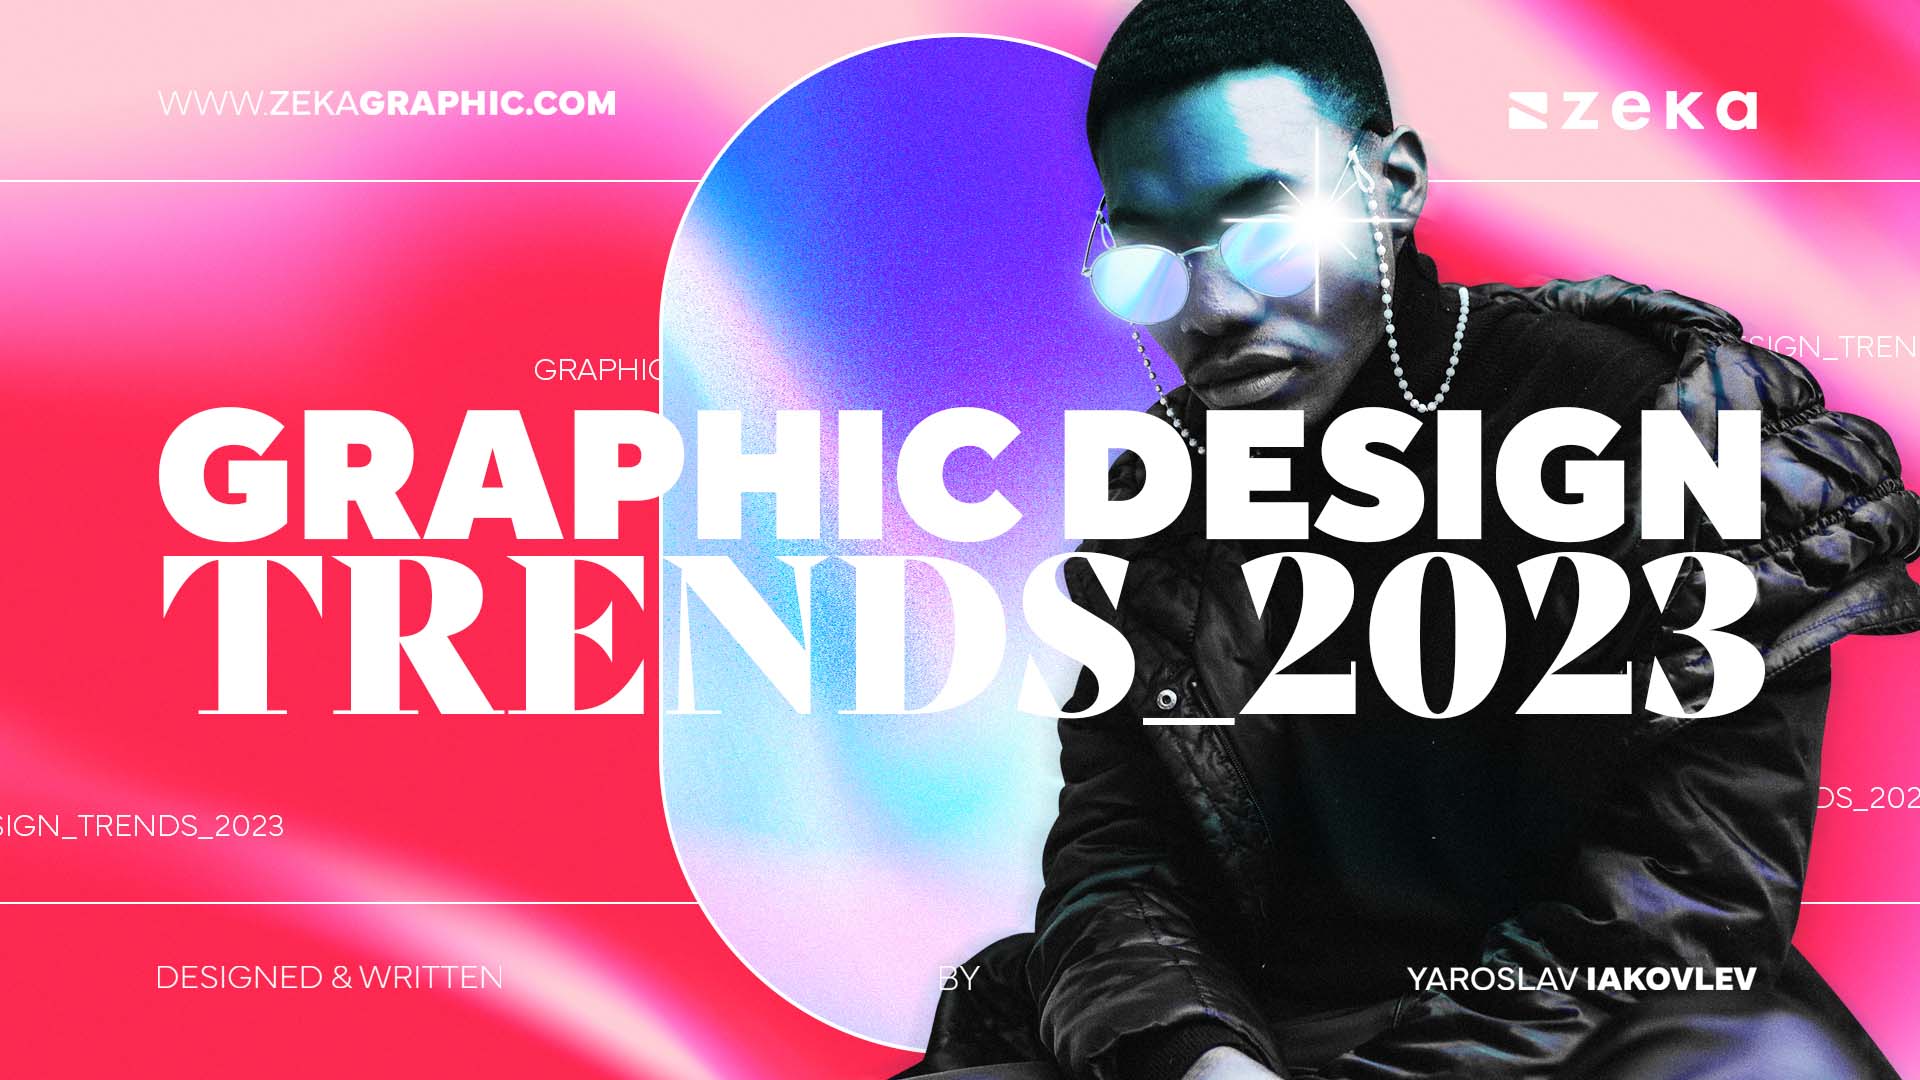 infographic design trend history